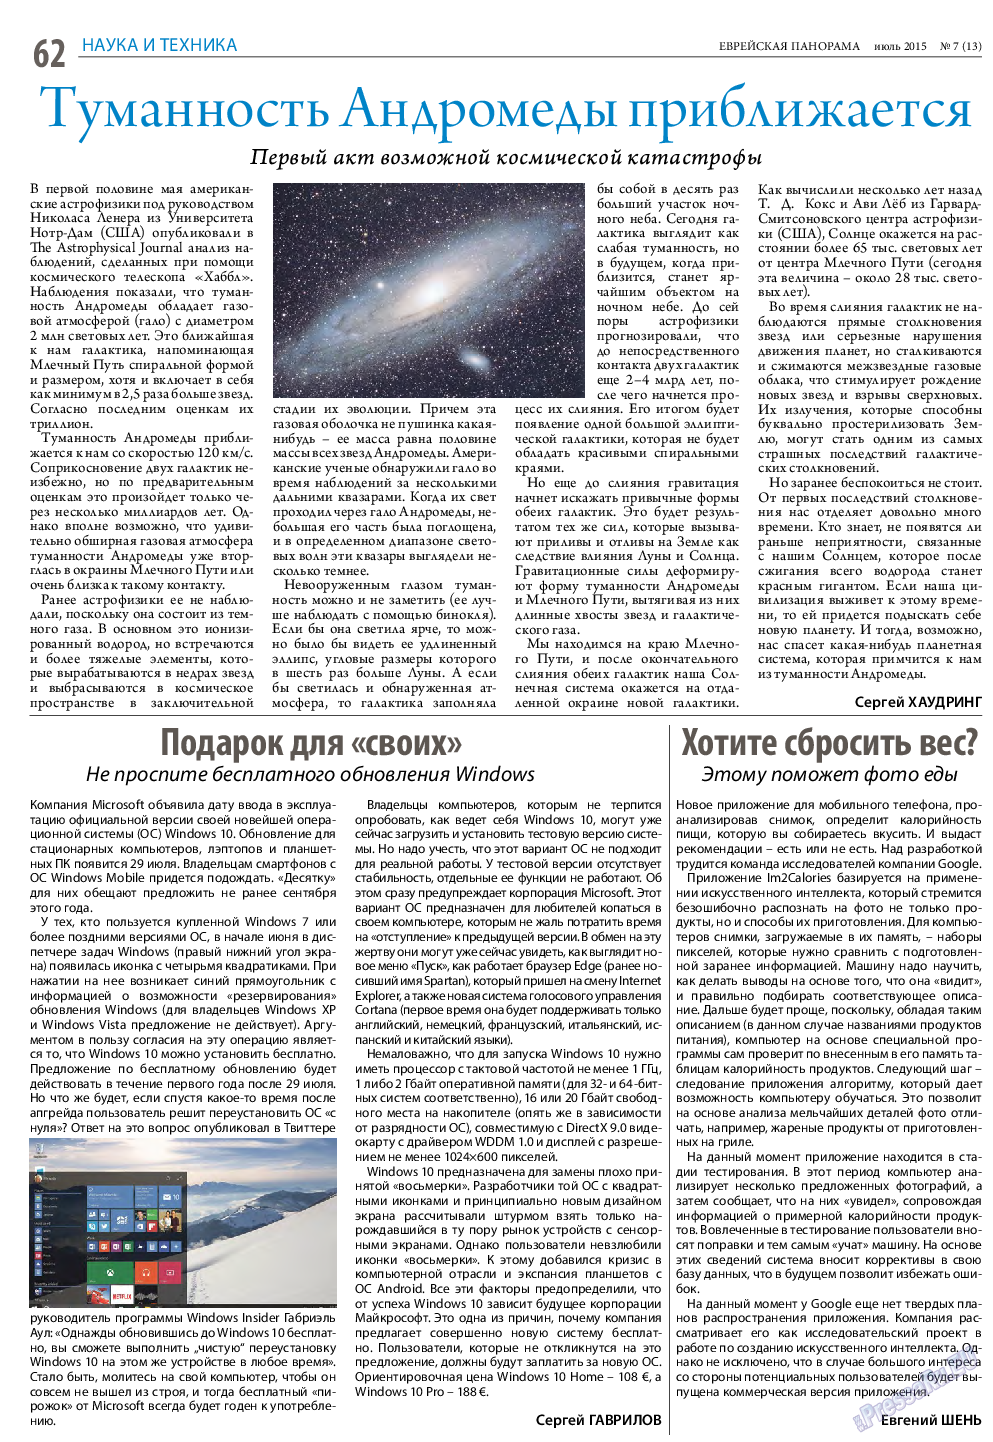 Еврейская панорама, газета. 2015 №7 стр.62